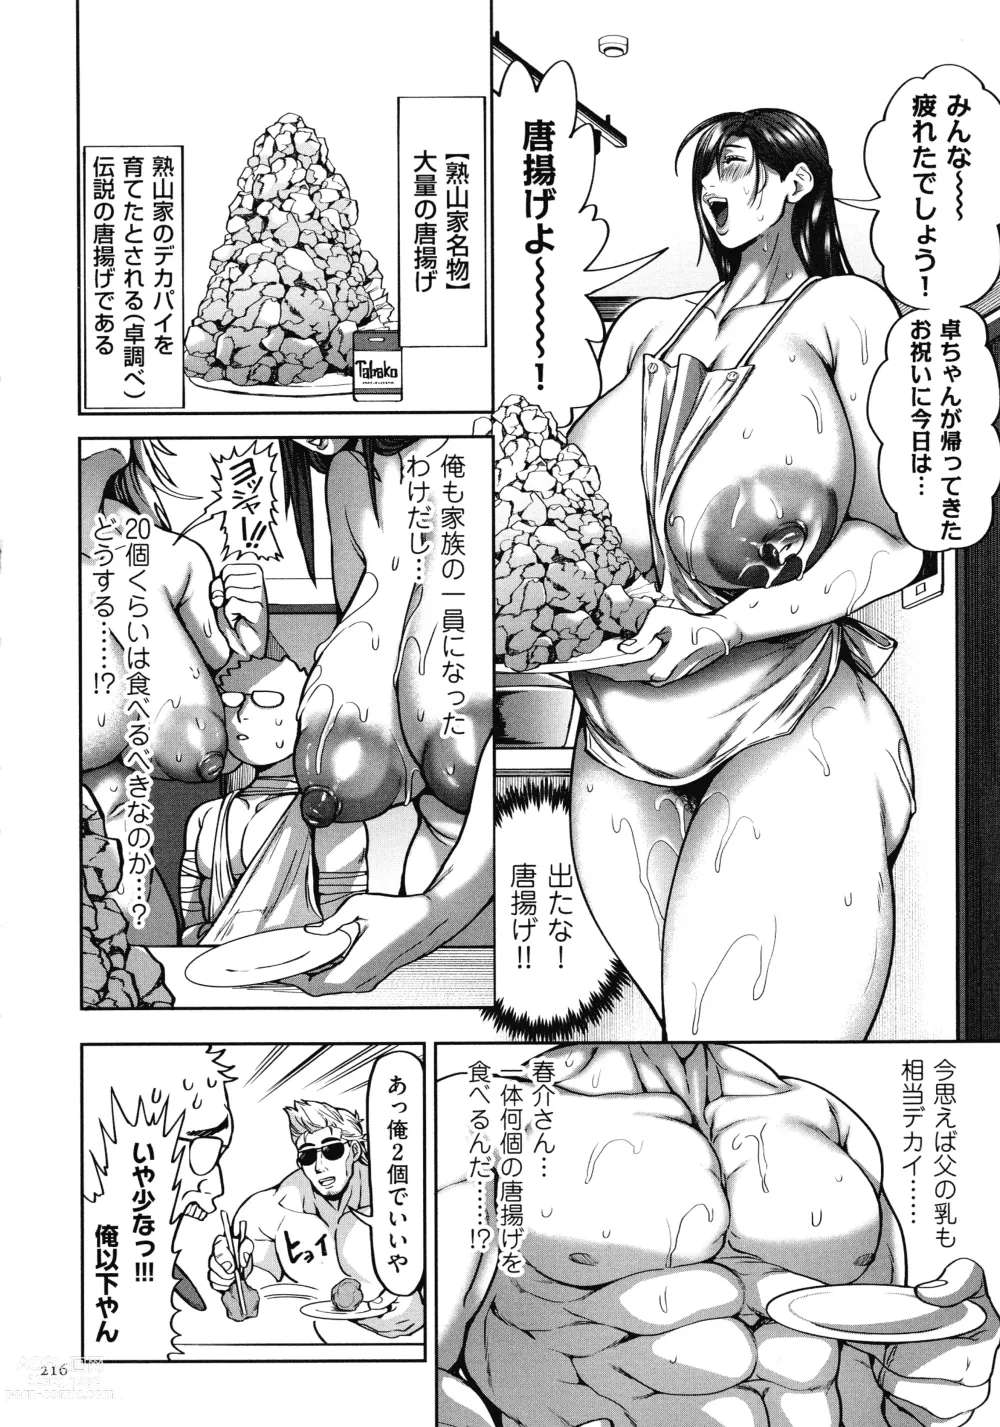 Page 218 of manga Shunkashuutou Harem Tengoku